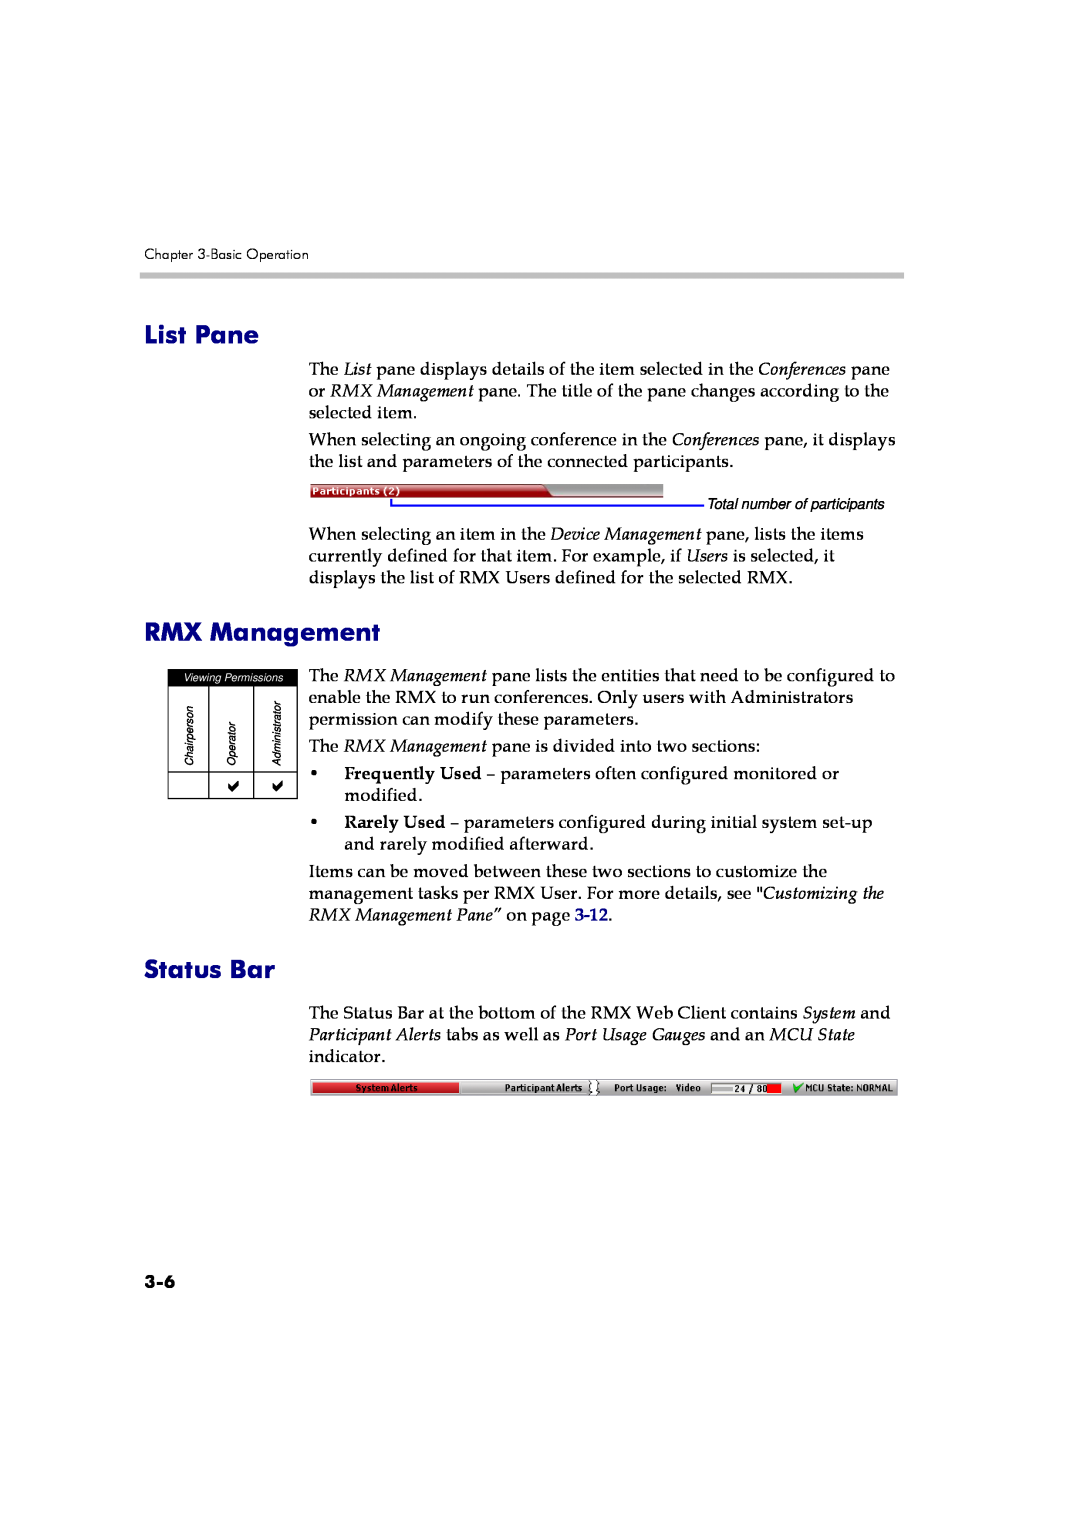 Polycom DOC2560A manual List Pane, RMX Management, Status Bar 